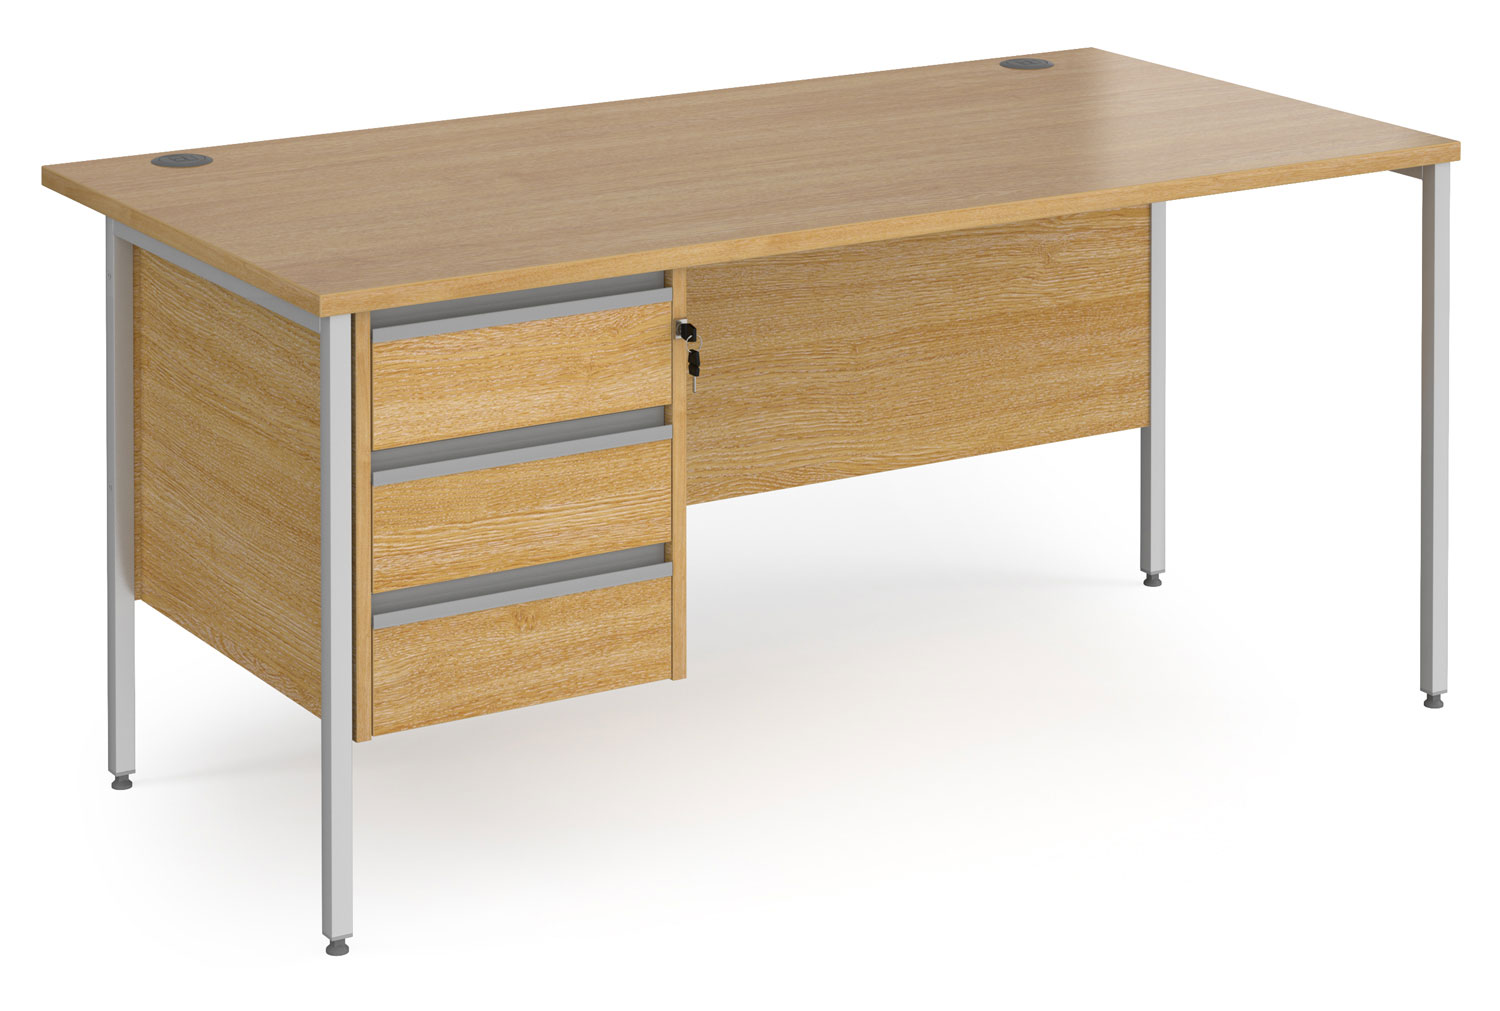 Value Line Classic+ Rectangular H-Leg Office Desk 3 Drawers (Silver Leg), 160wx80dx73h (cm), Oak